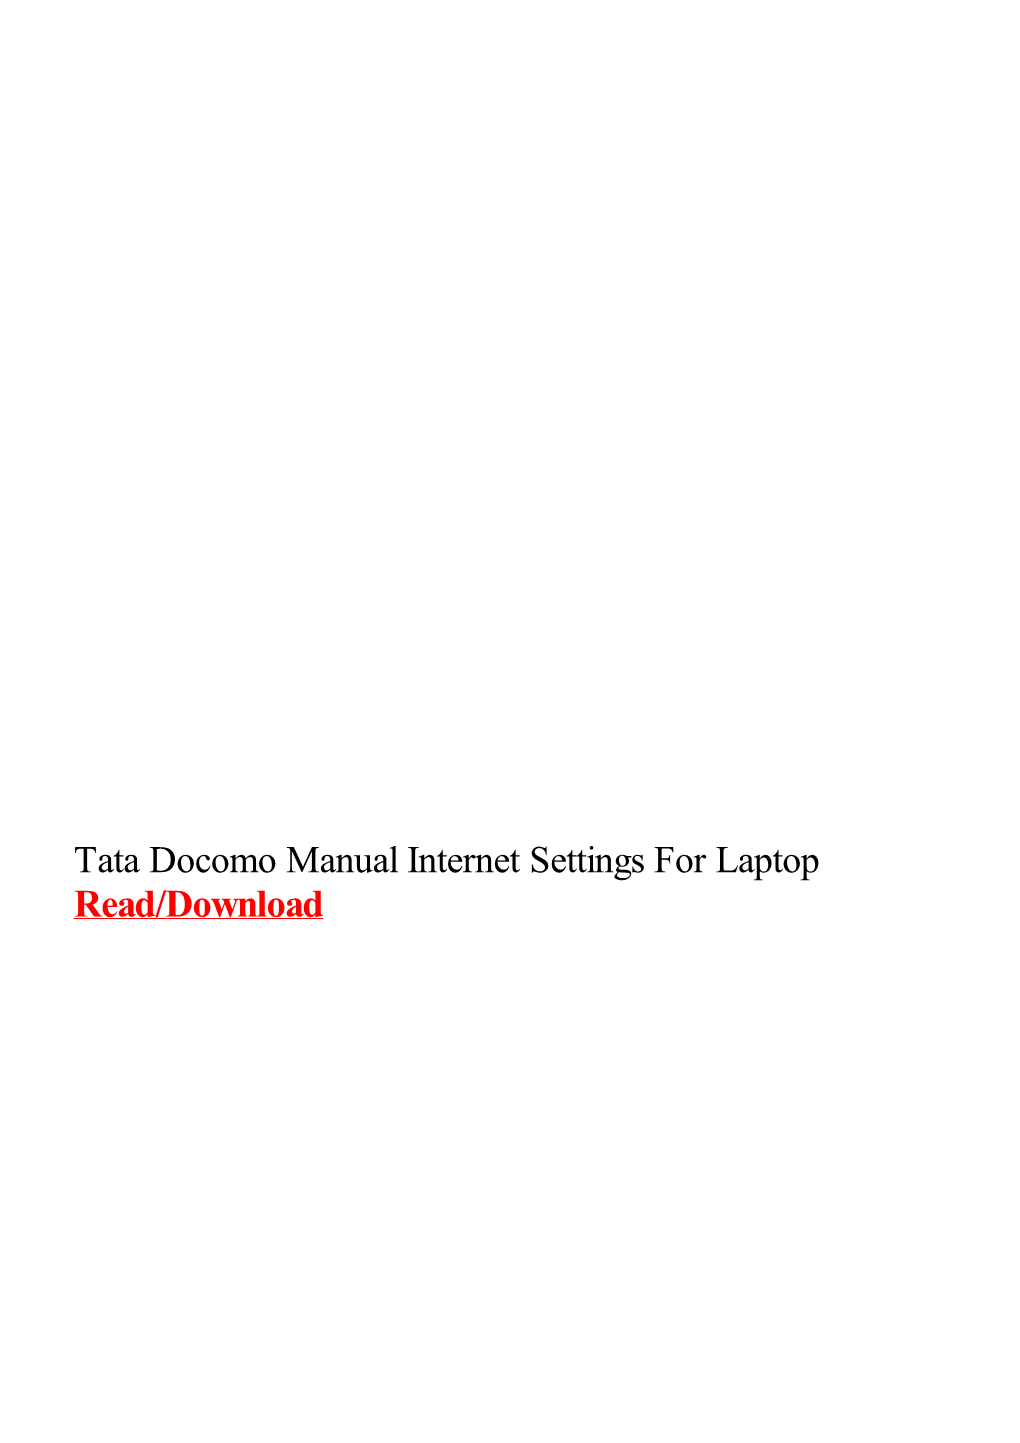 Tata Docomo Manual Internet Settings for Laptop